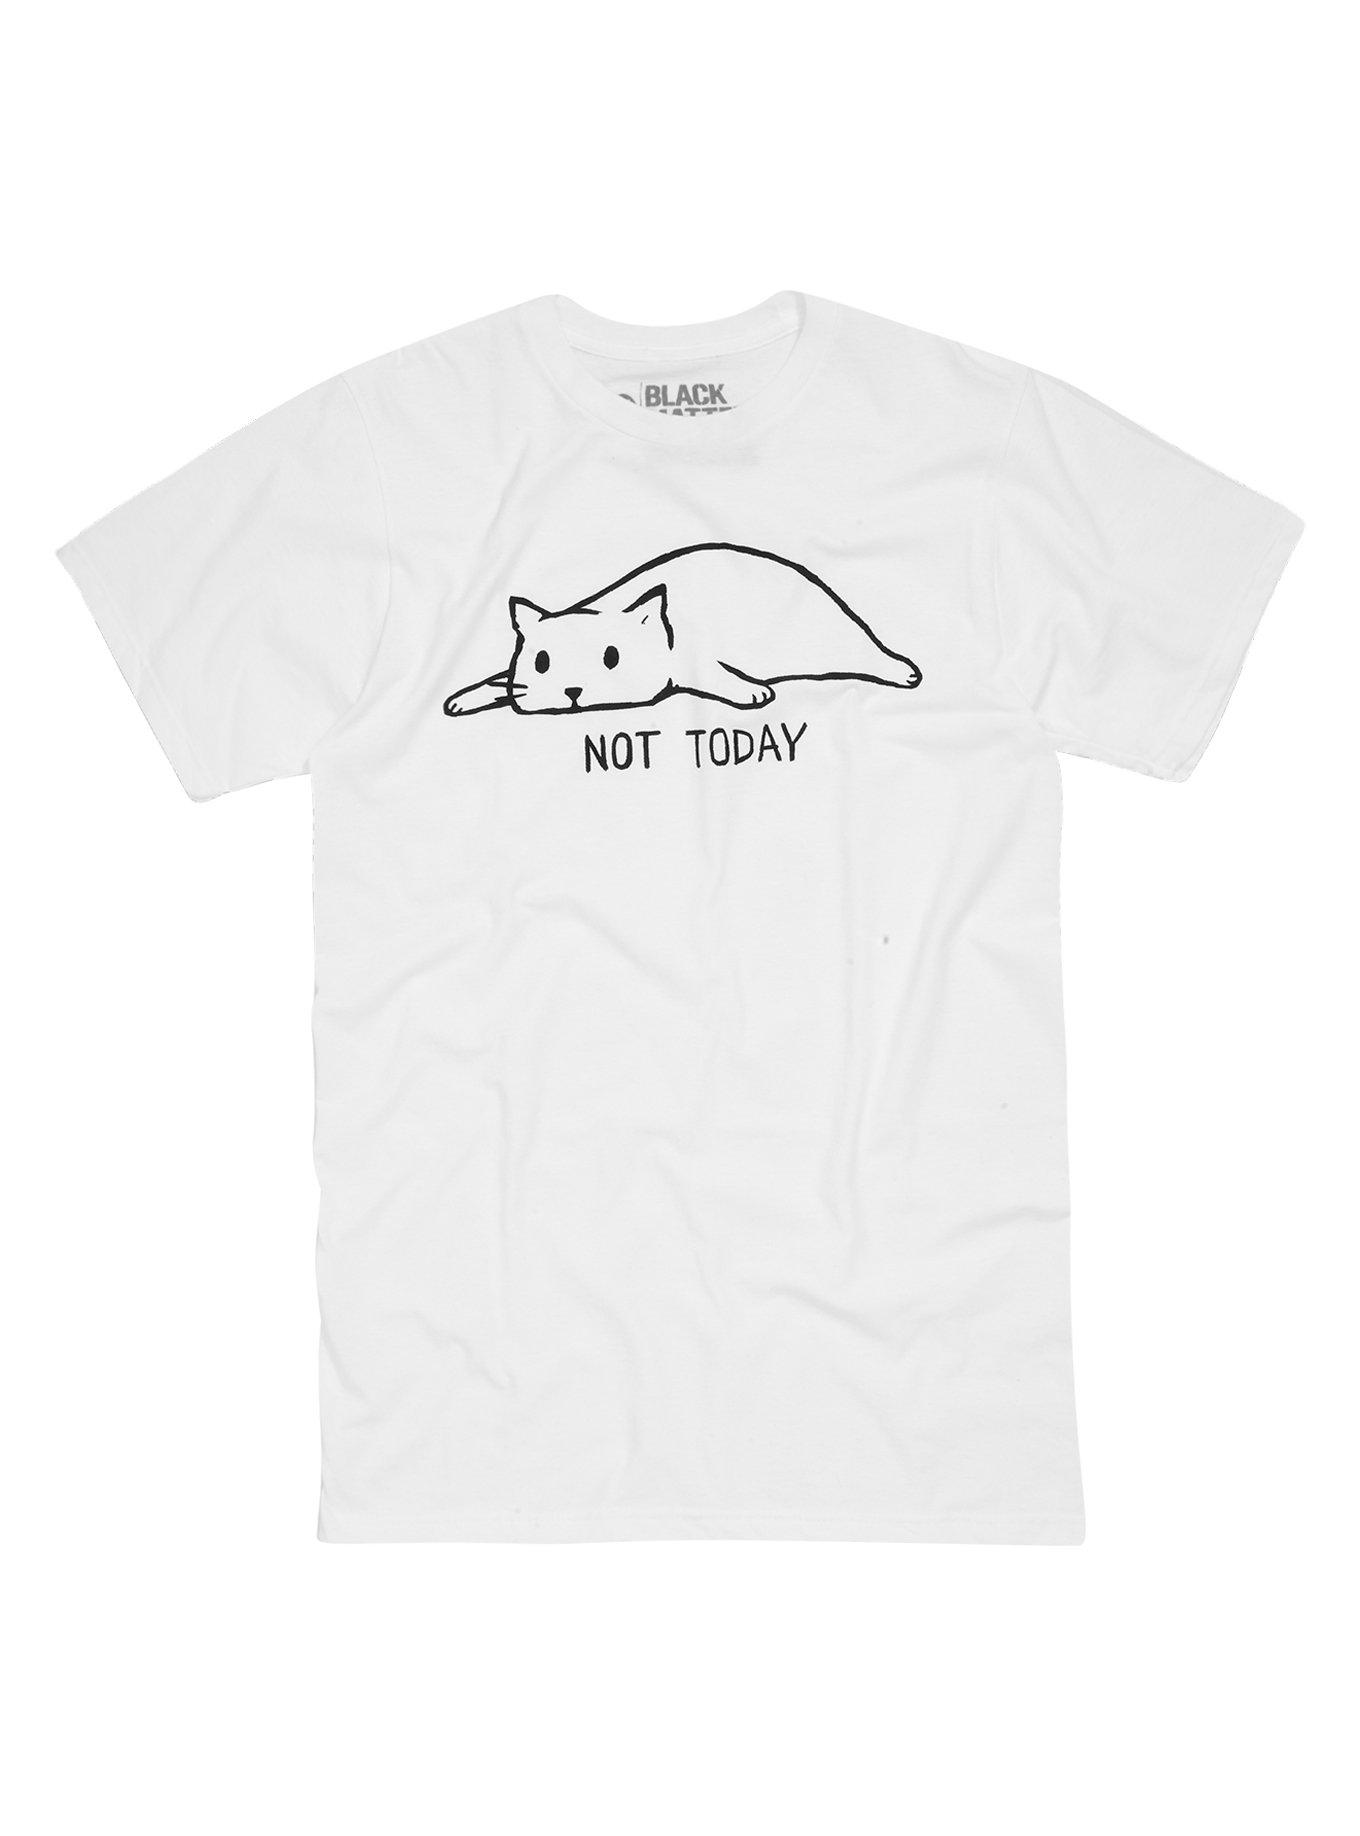 Lost Gods Men's Cat in Space T-Shirt, Size: Large, Black